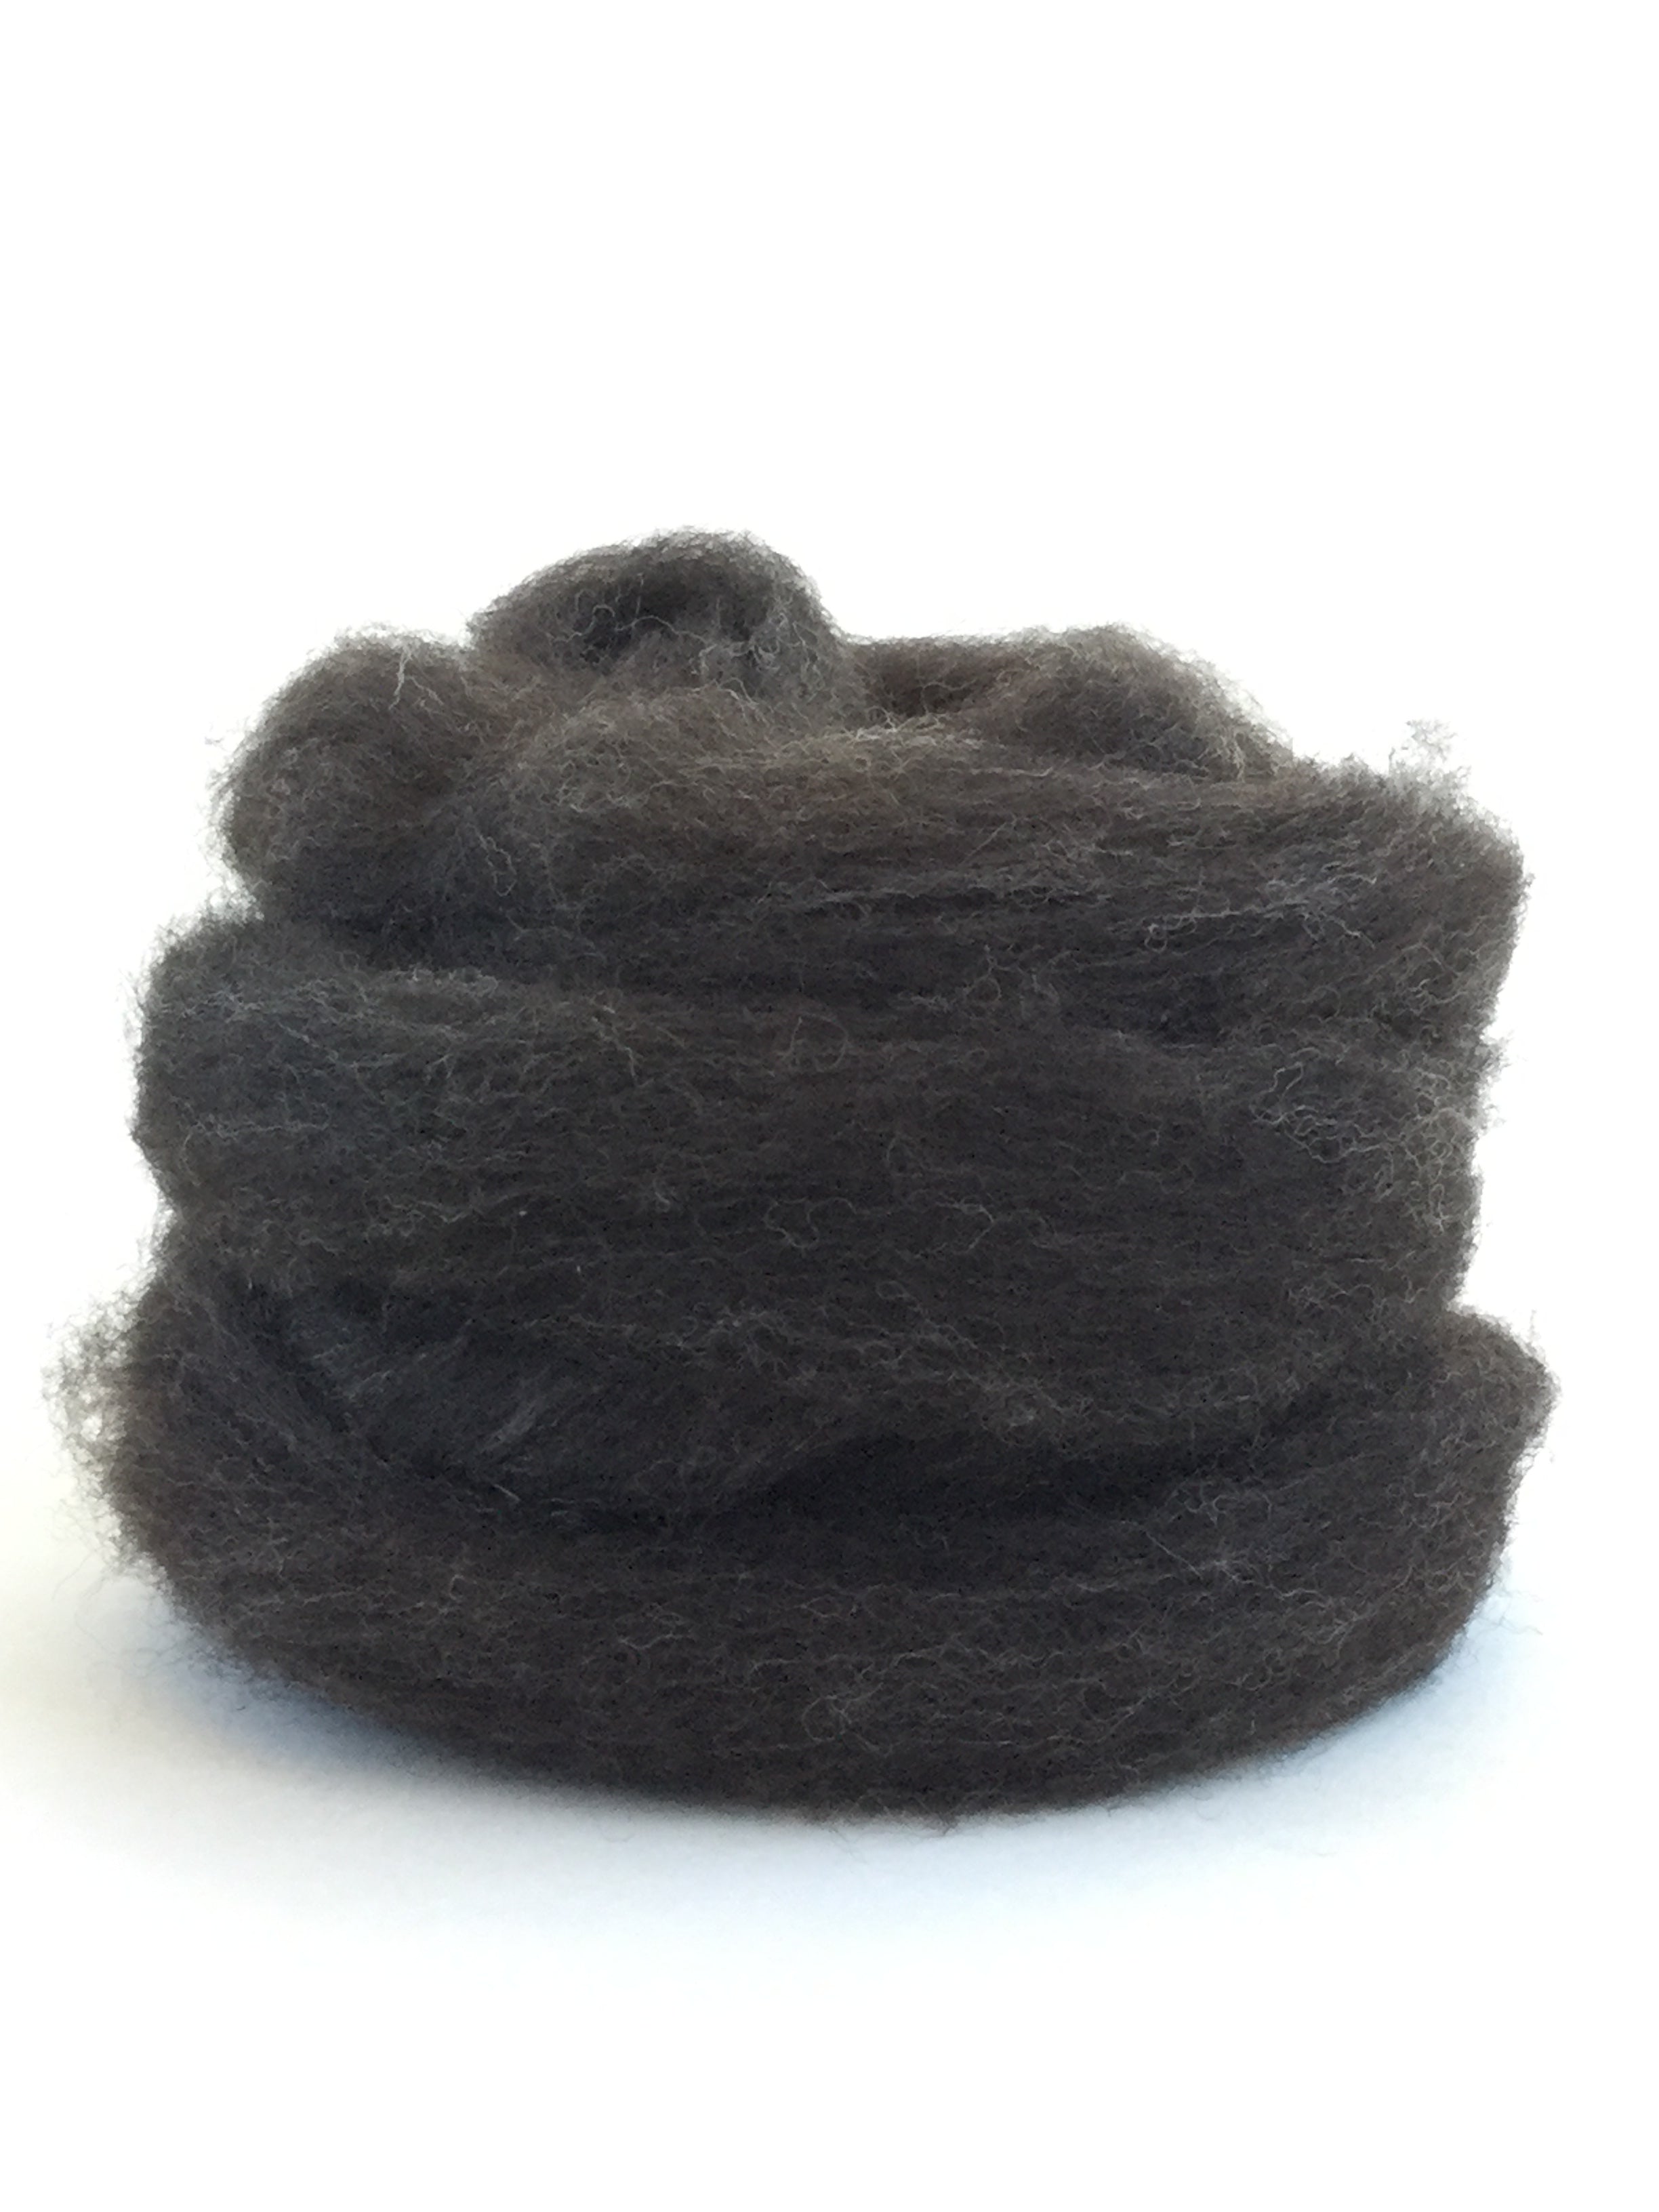 Local wool roving natural black